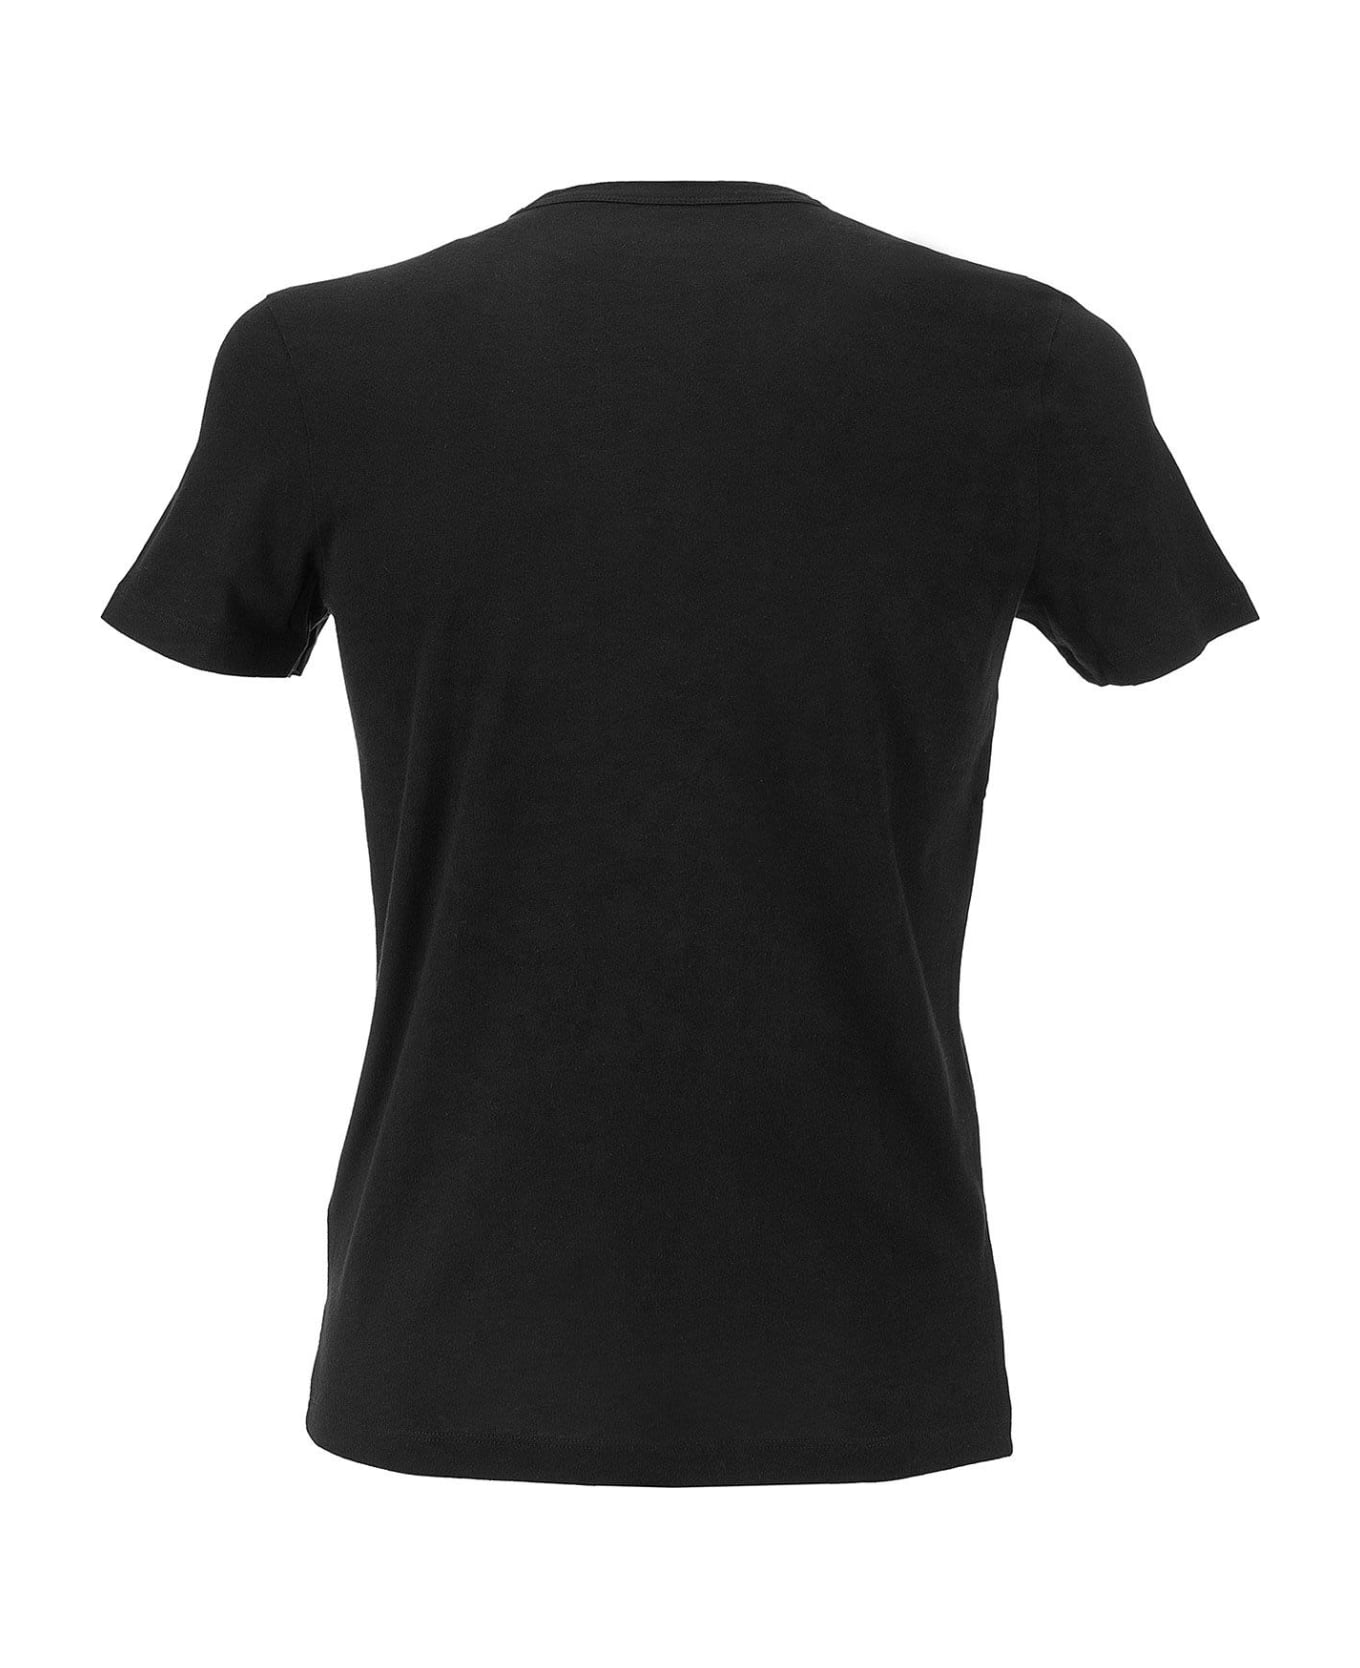 Majestic Filatures Black Crew Neck T-shirt In Silk Touch Cotton - Black